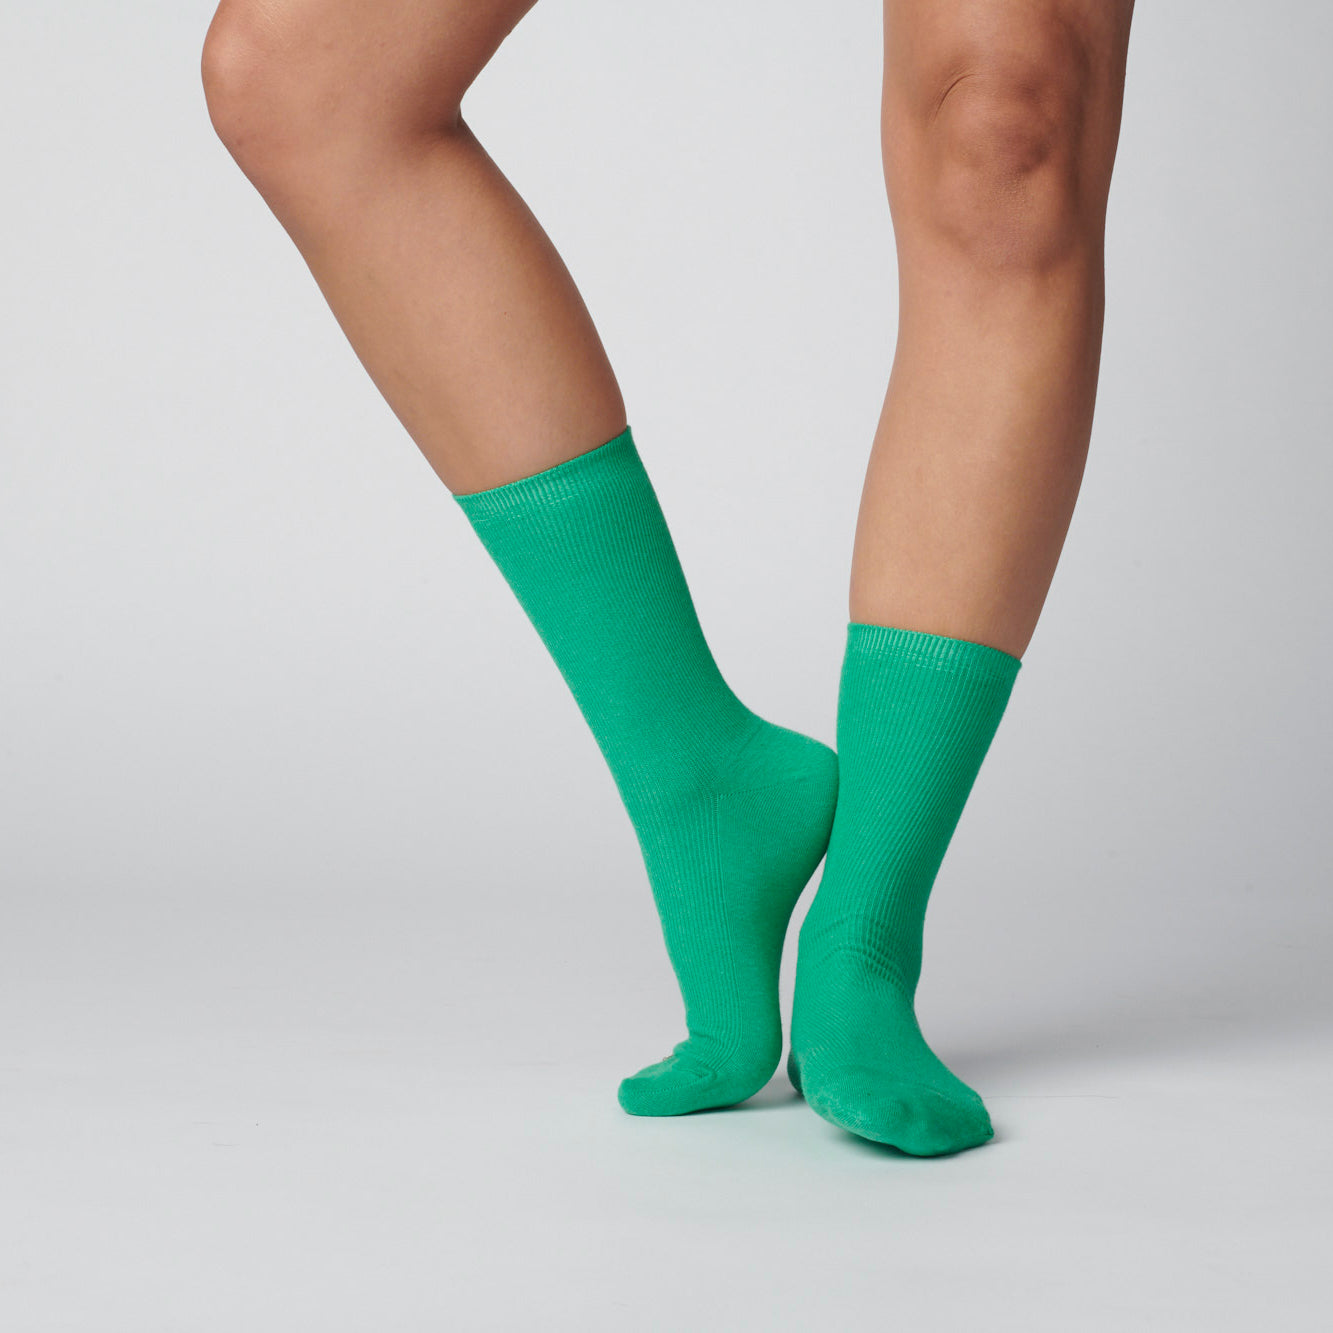 Hooray Sock Co.'s Moss Crew Socks: Verdant vibe in cozy cotton. Shorter crew length. 80% cotton, 20% spandex. Made in South Korea. Small (Women's 4-10).